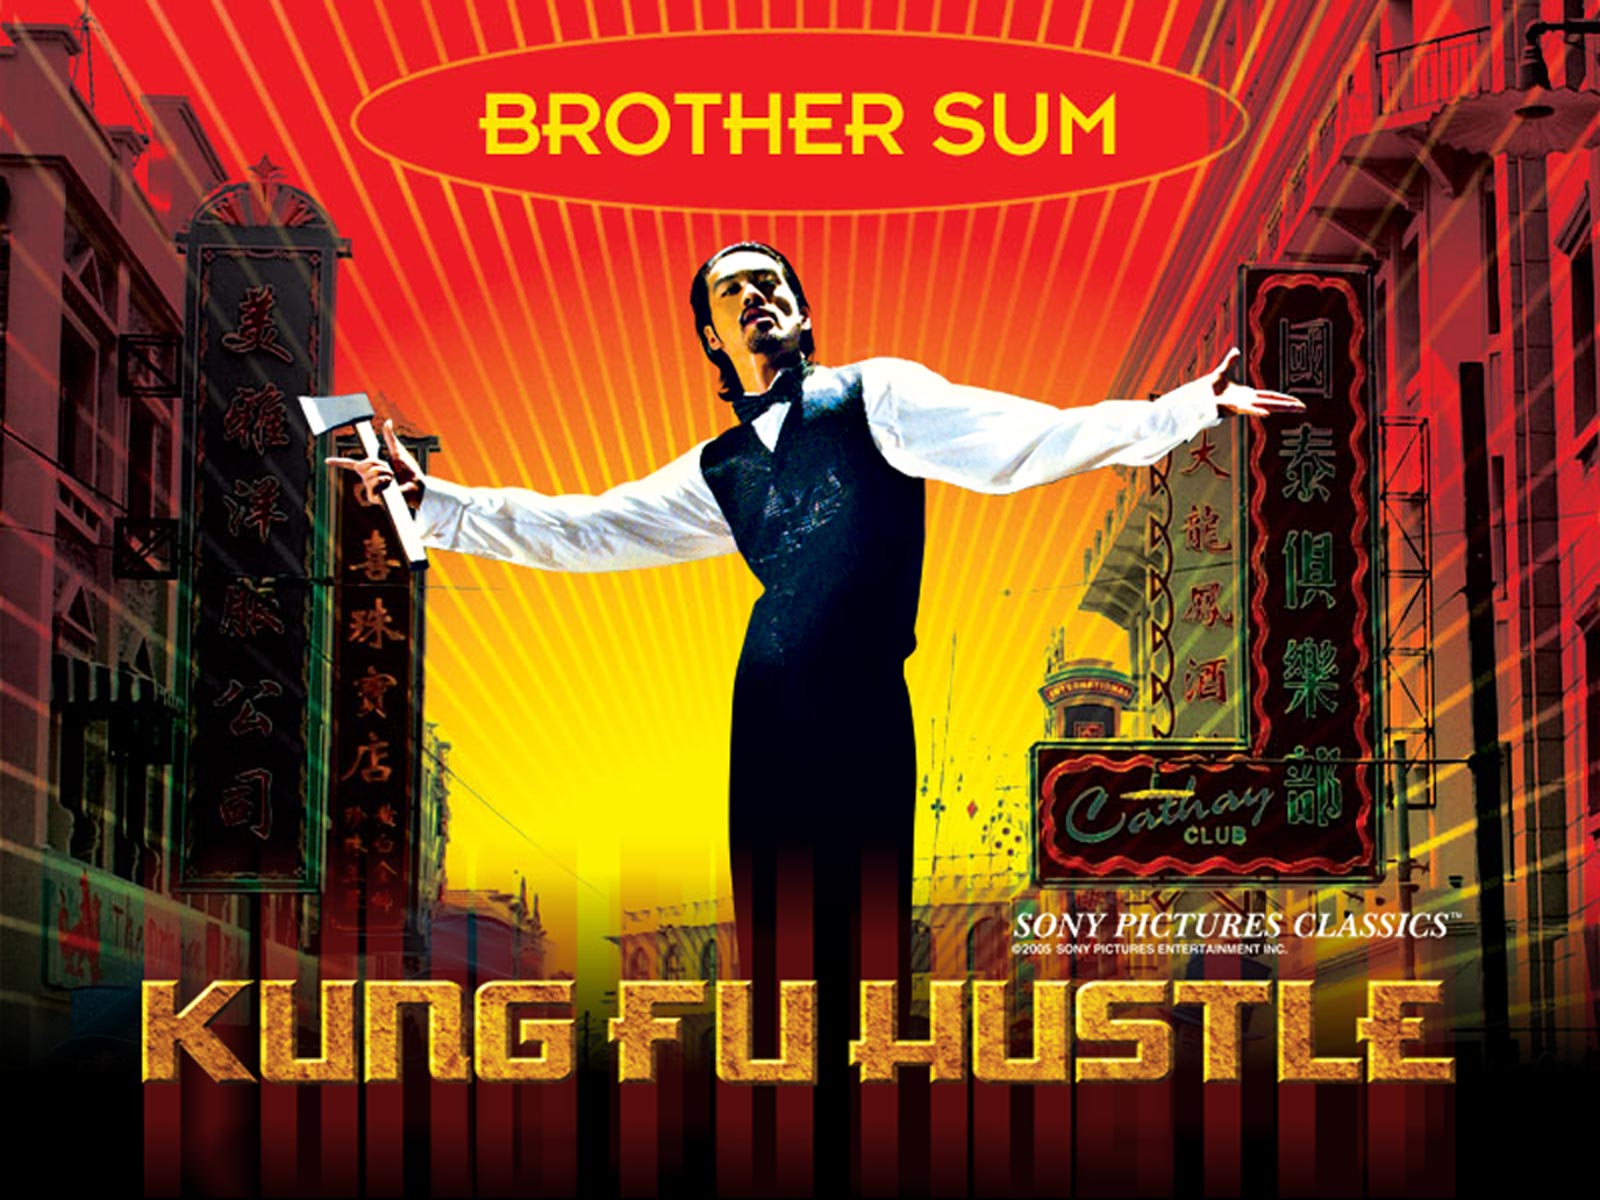 Movie Kung Fu Hustle HD Wallpaper | Background Image